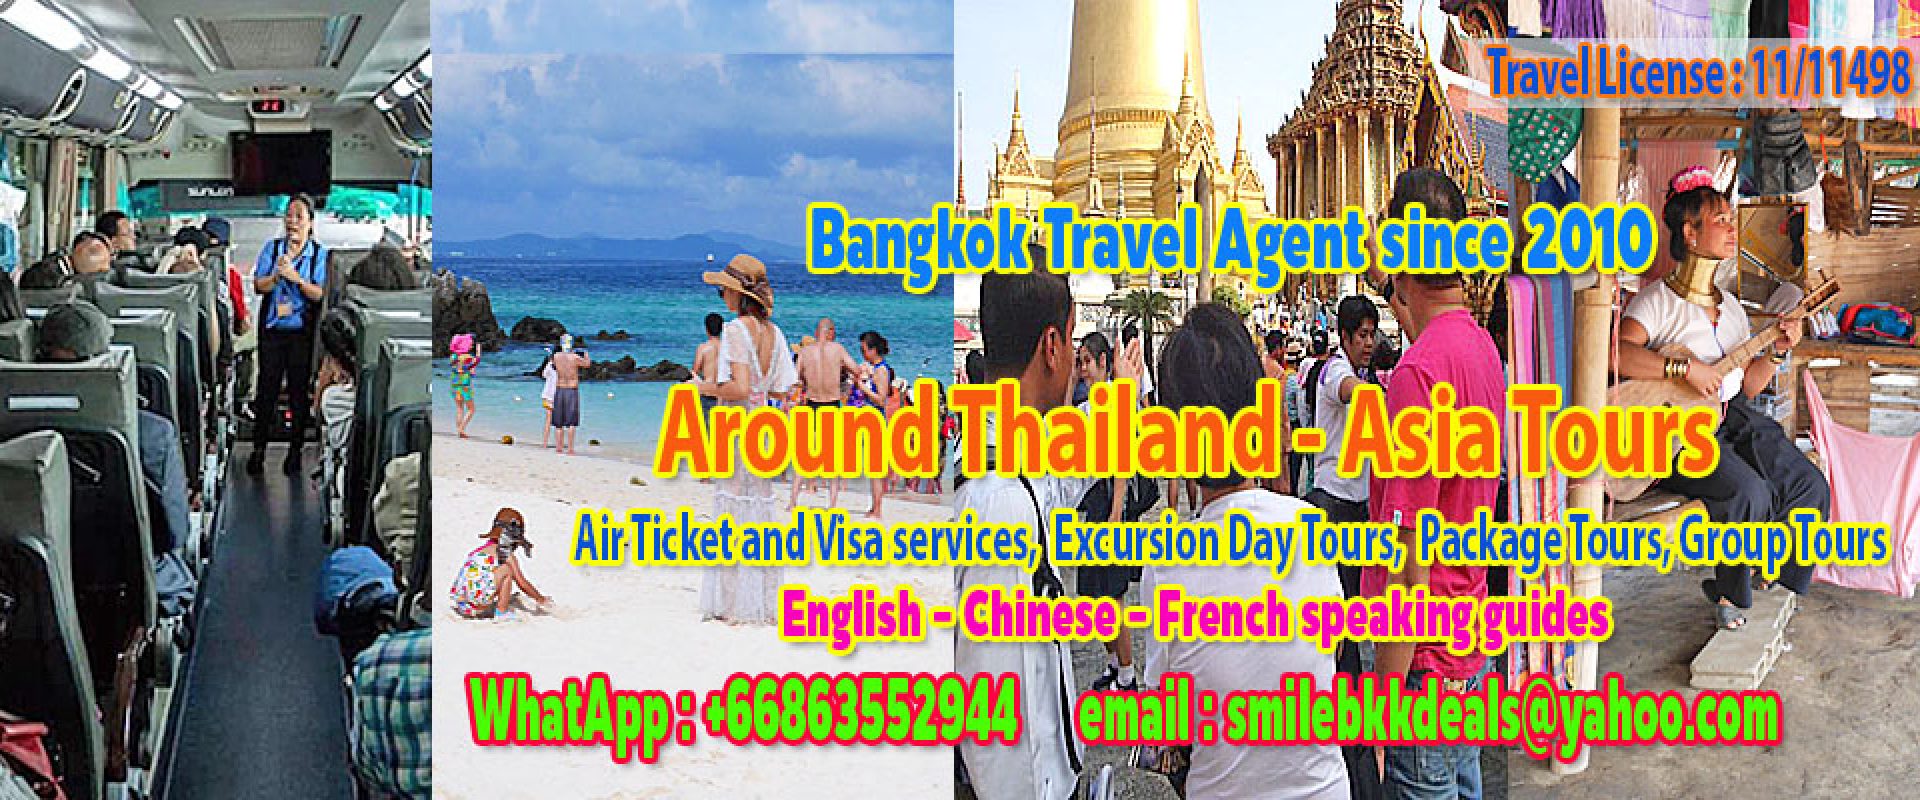 bangkok tour agent